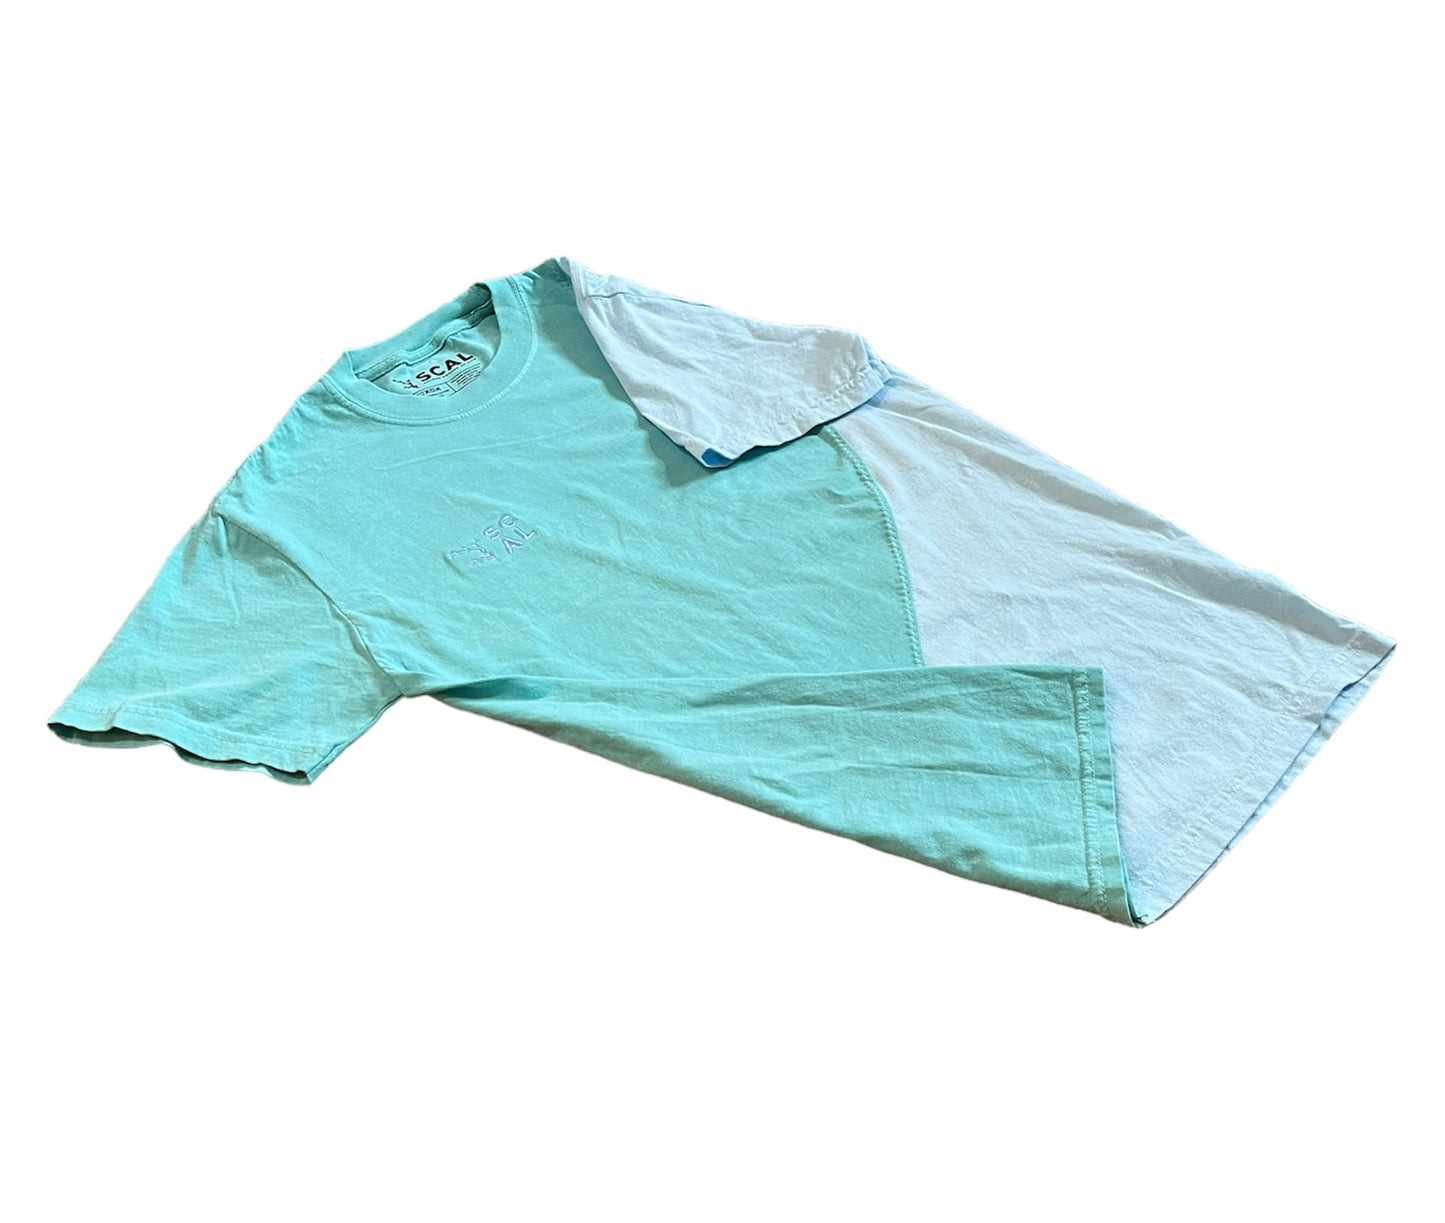 Turquoise / Light Blue T-Shirt SM